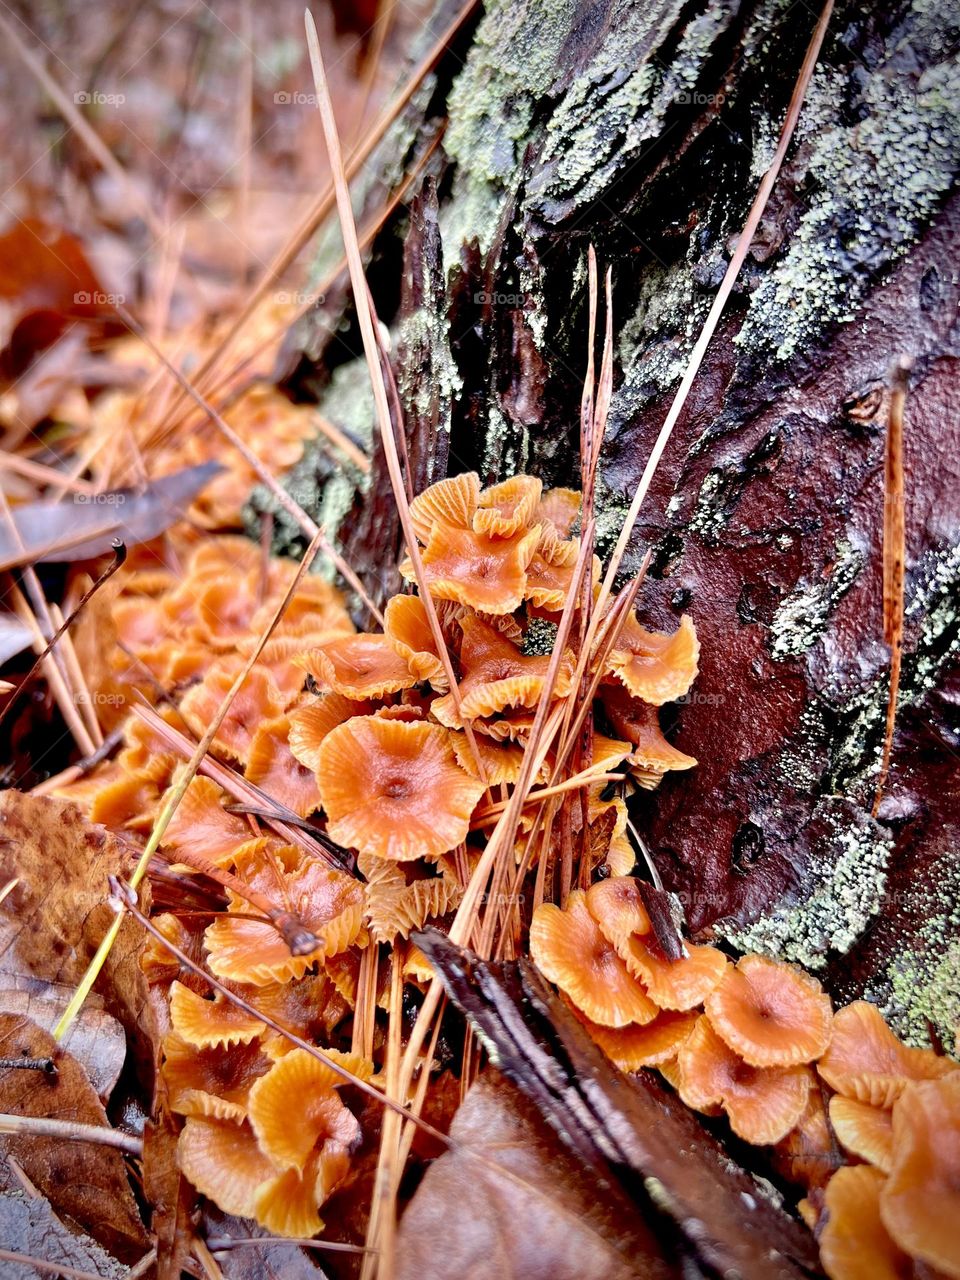 Plethora of orange mushrooms around the base of a pine tree